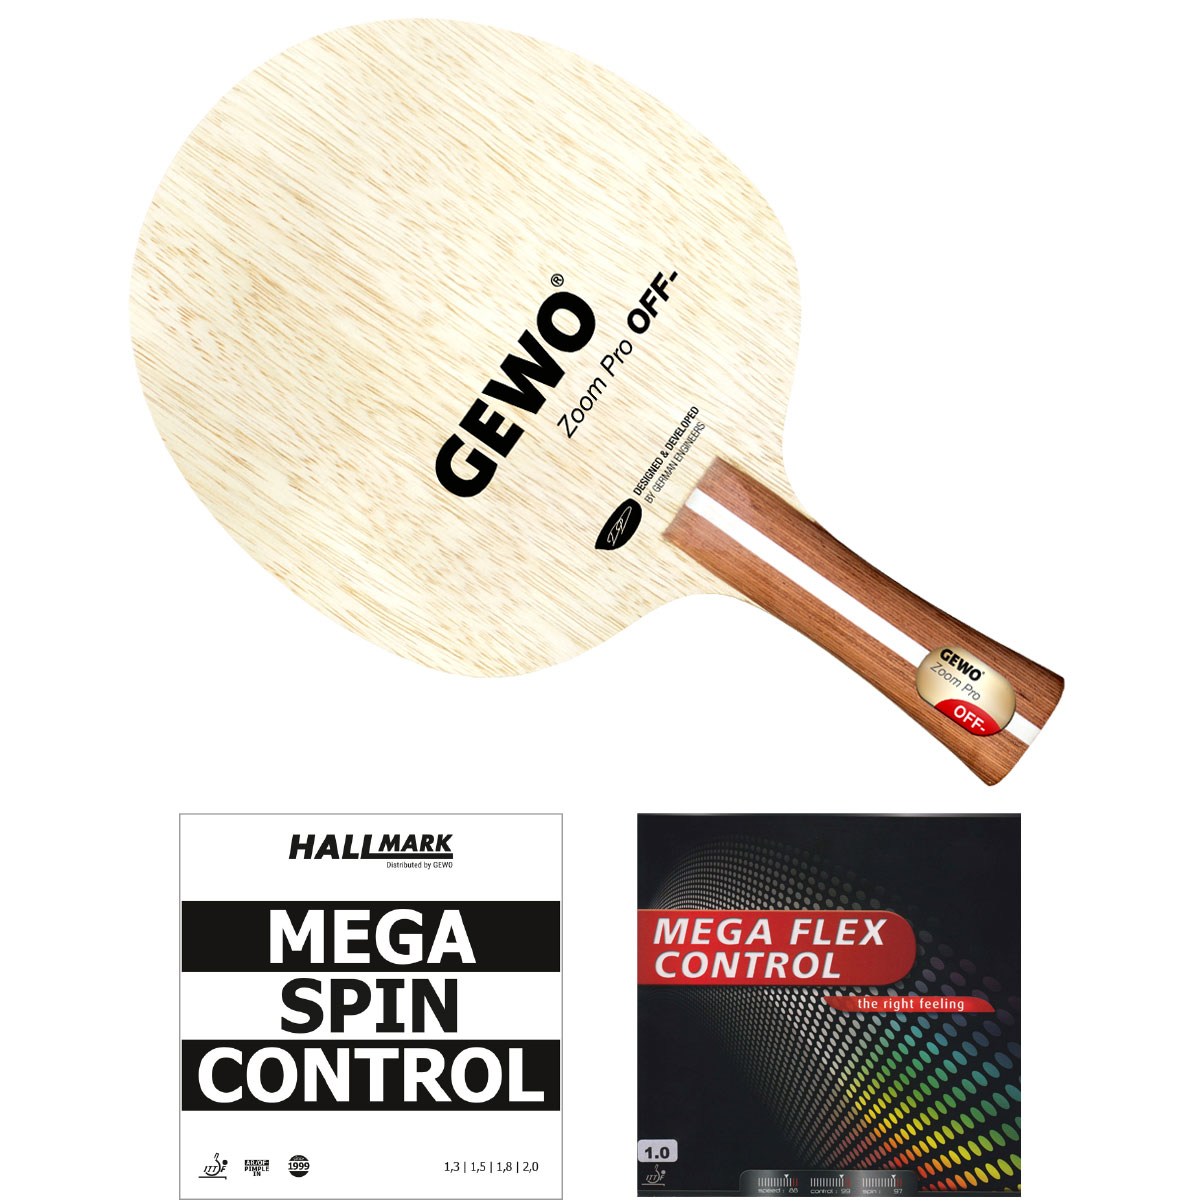 GEWO Schläger: Holz Zoom Pro mit HALLMARK Mega Spin Control + Mega Flex Control